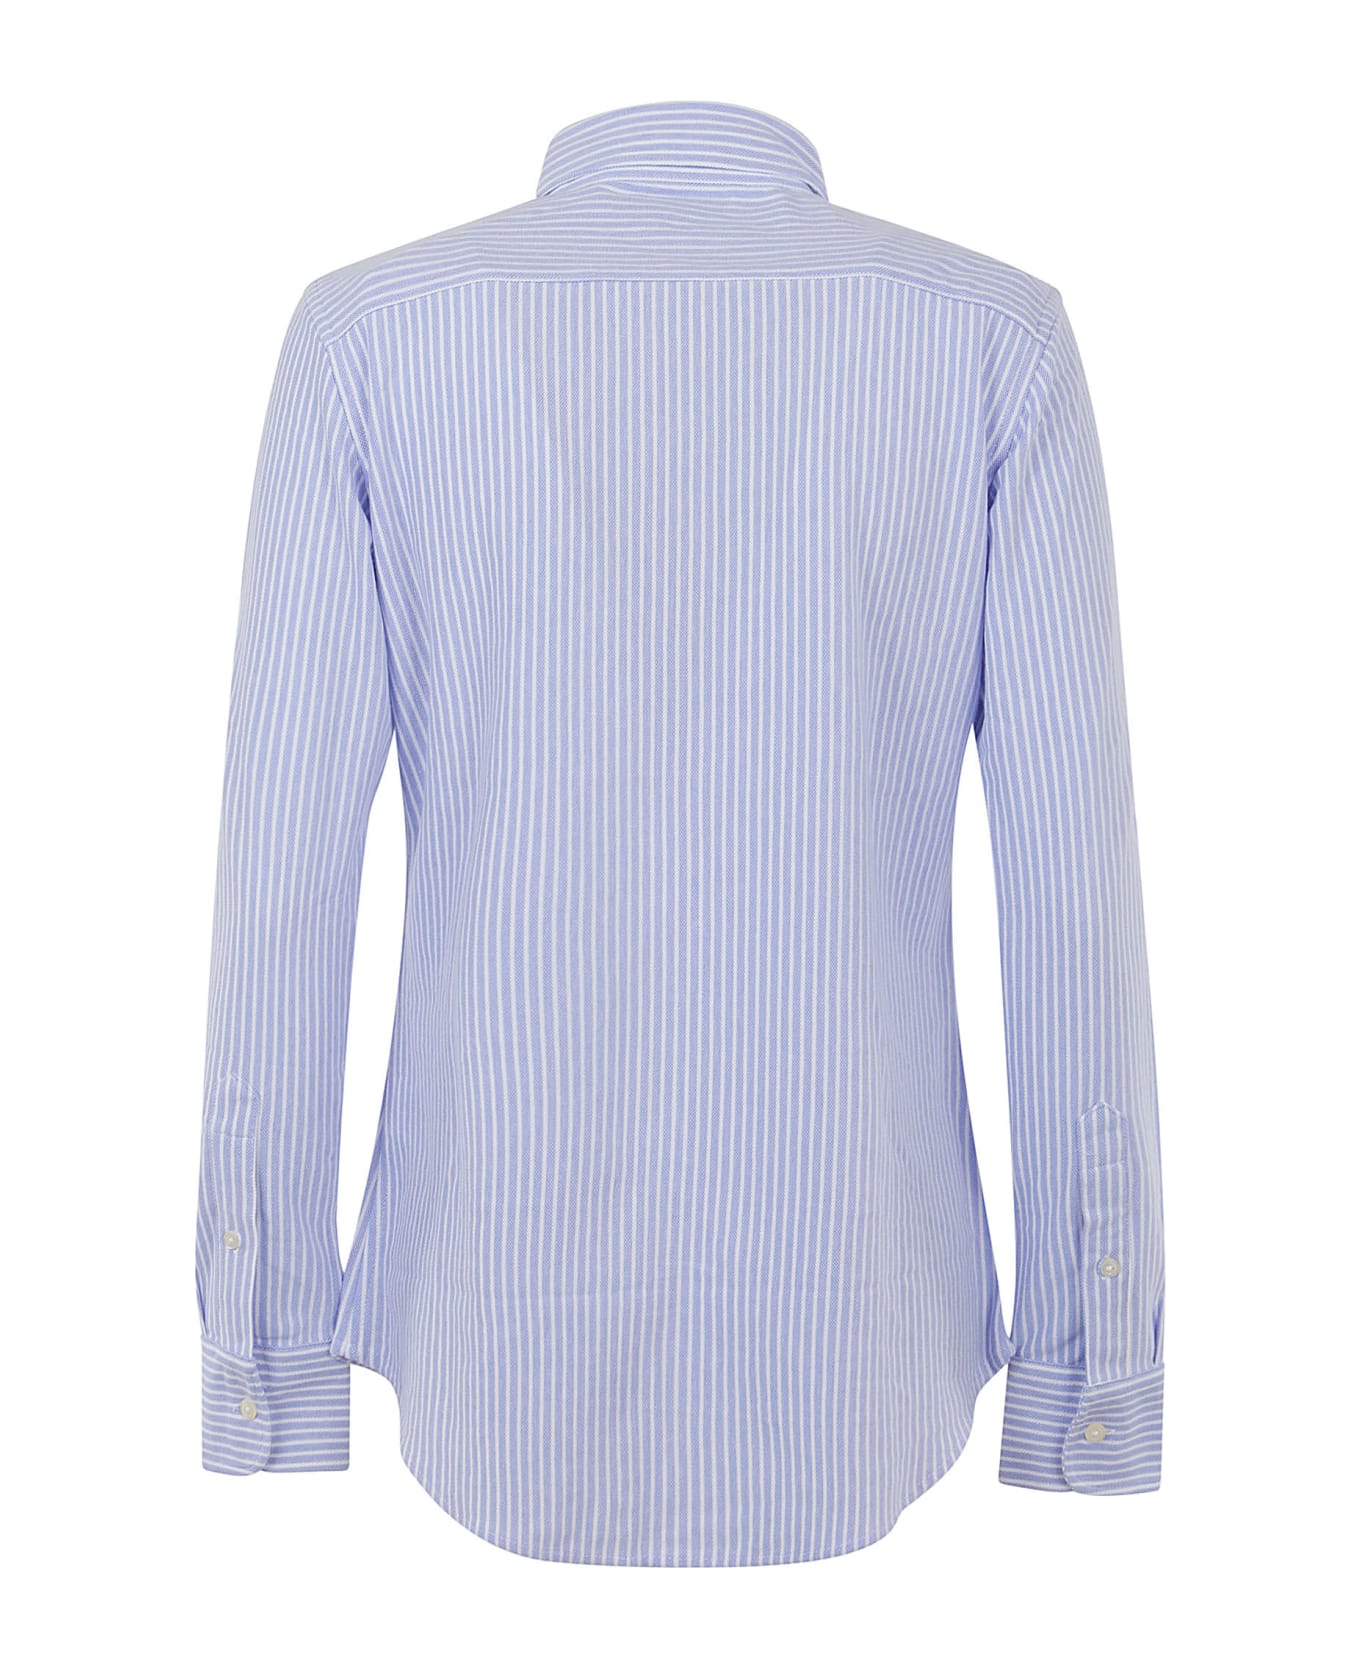 Ralph Lauren Ls Knt Oxfrd-long Sleeve-button Front Shirt - Harbor Island Blue White